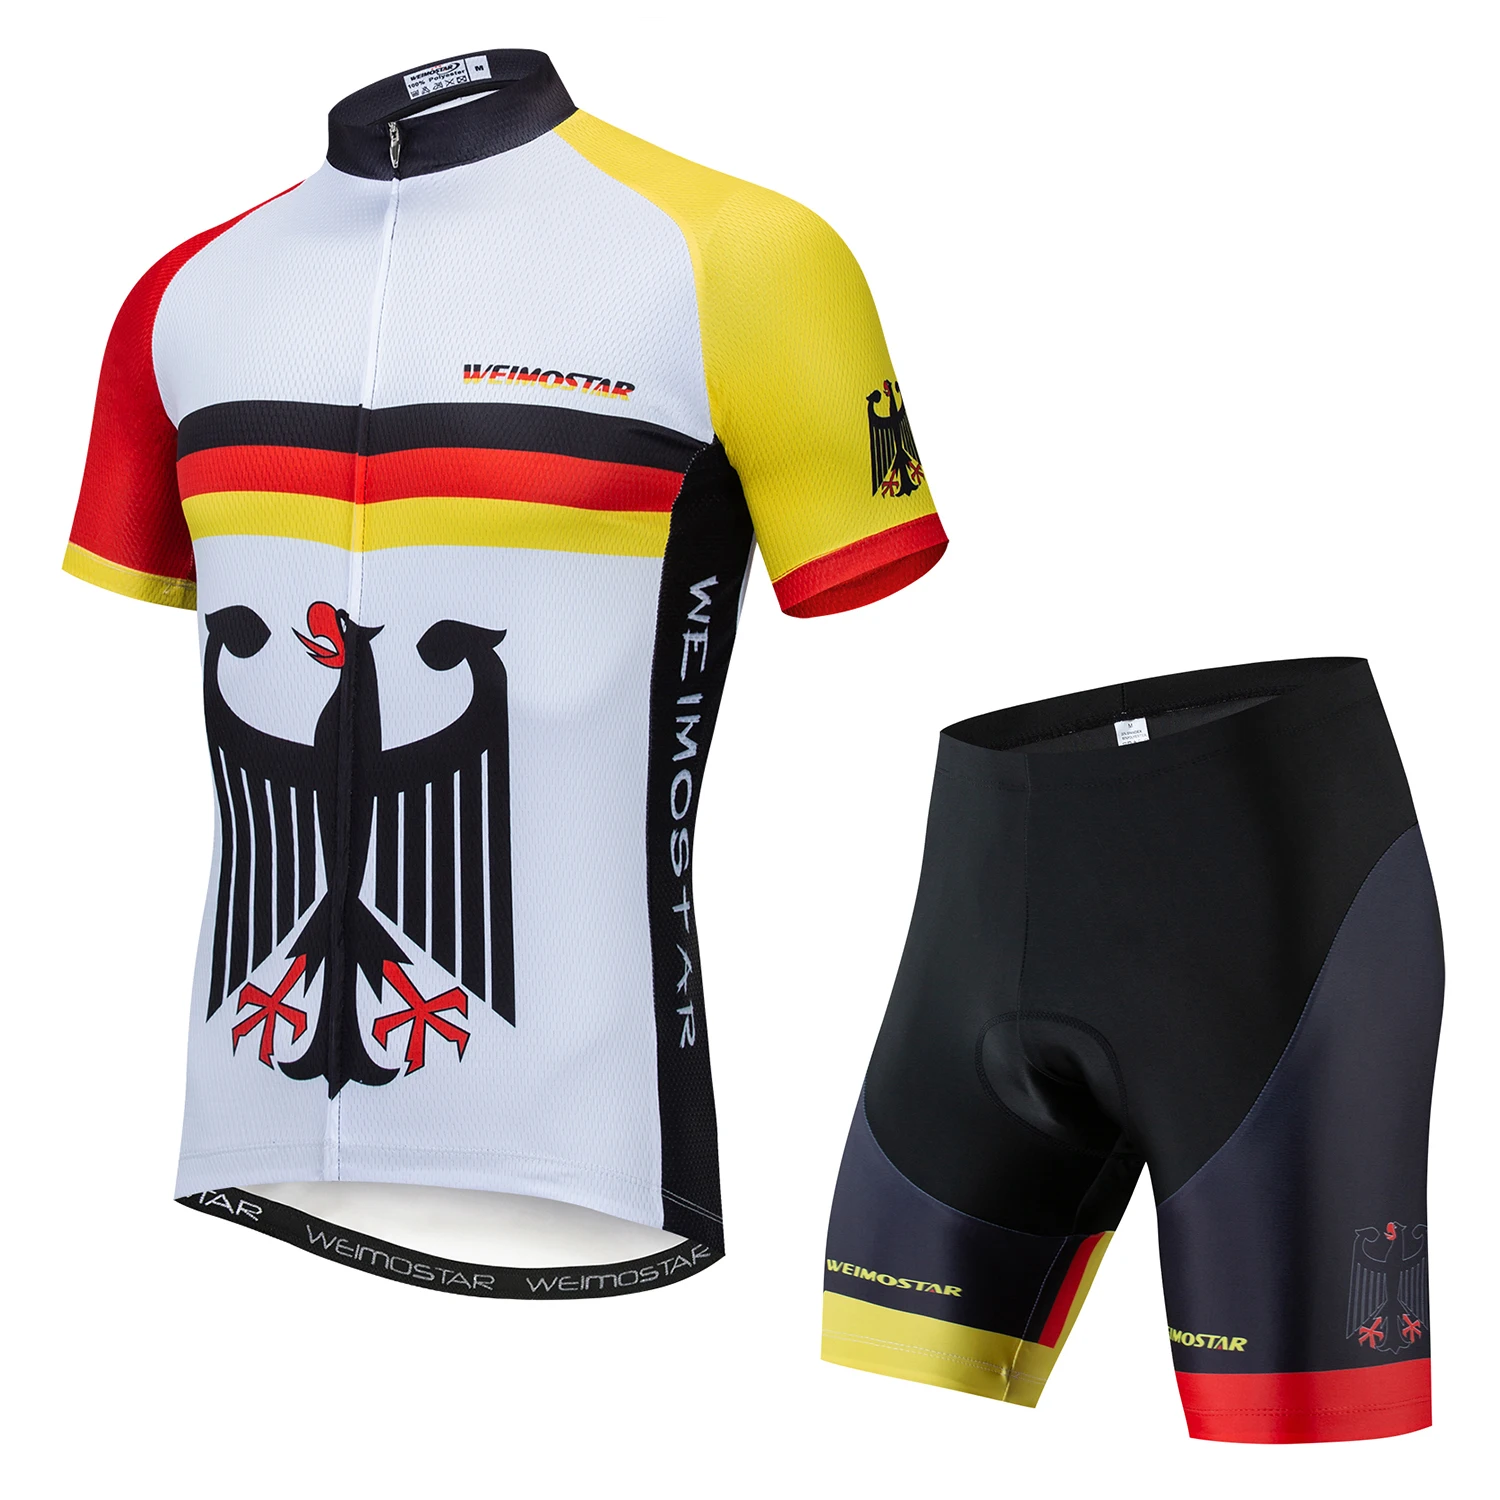 2019 männer Radfahren Jersey Sommer Kurzarm Set Maillot shorts Fahrrad Kleidung uniform Sportwear Hemd Kleidung Anzug Deutsch